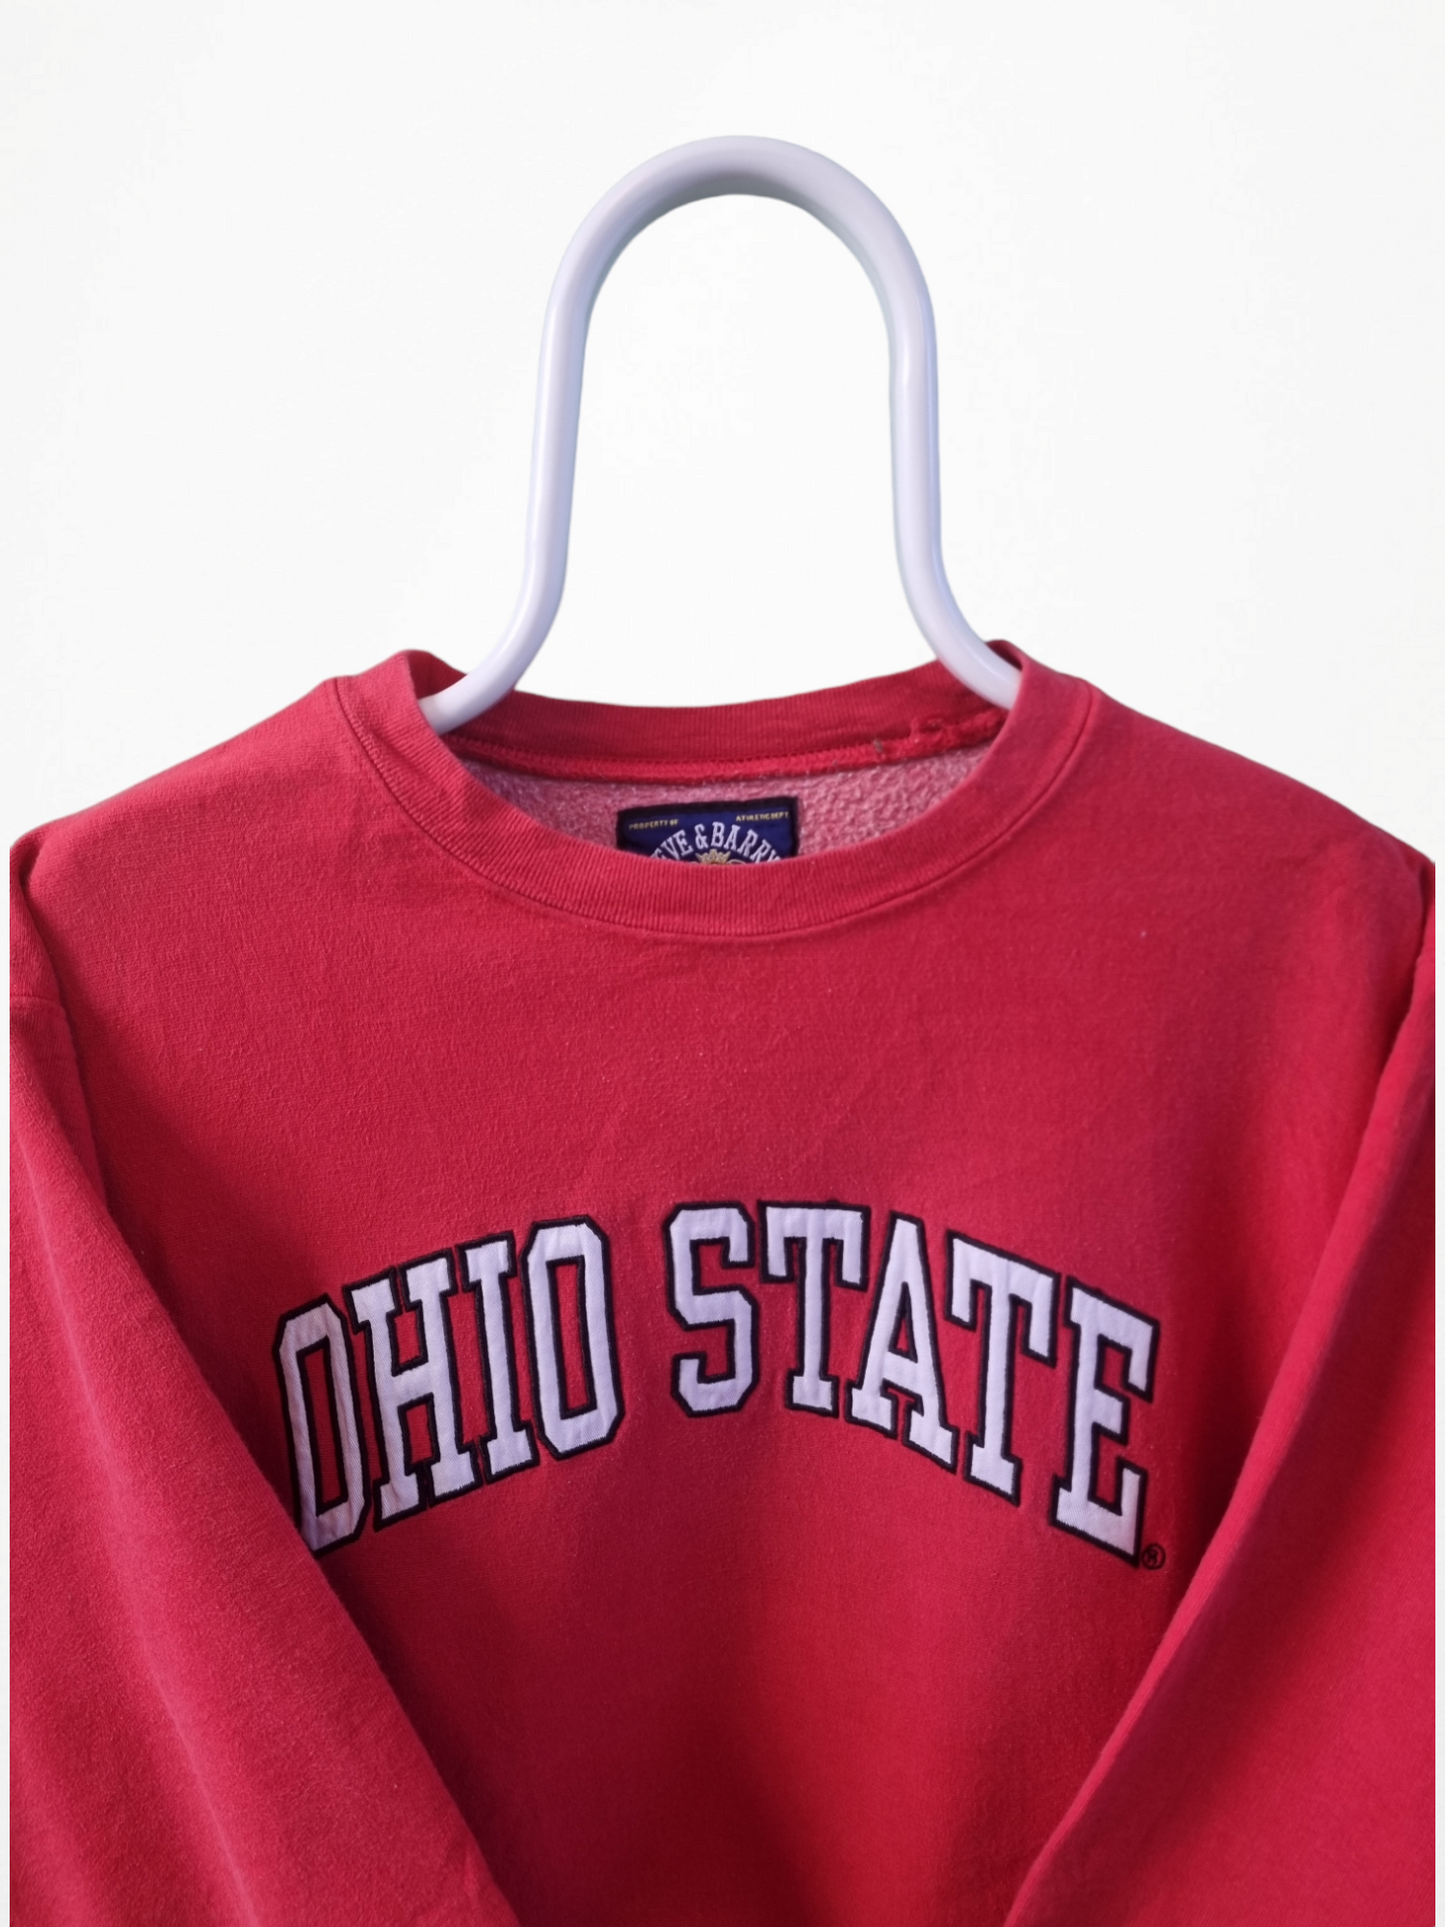 Vintage USA Ohio state sweater maat S